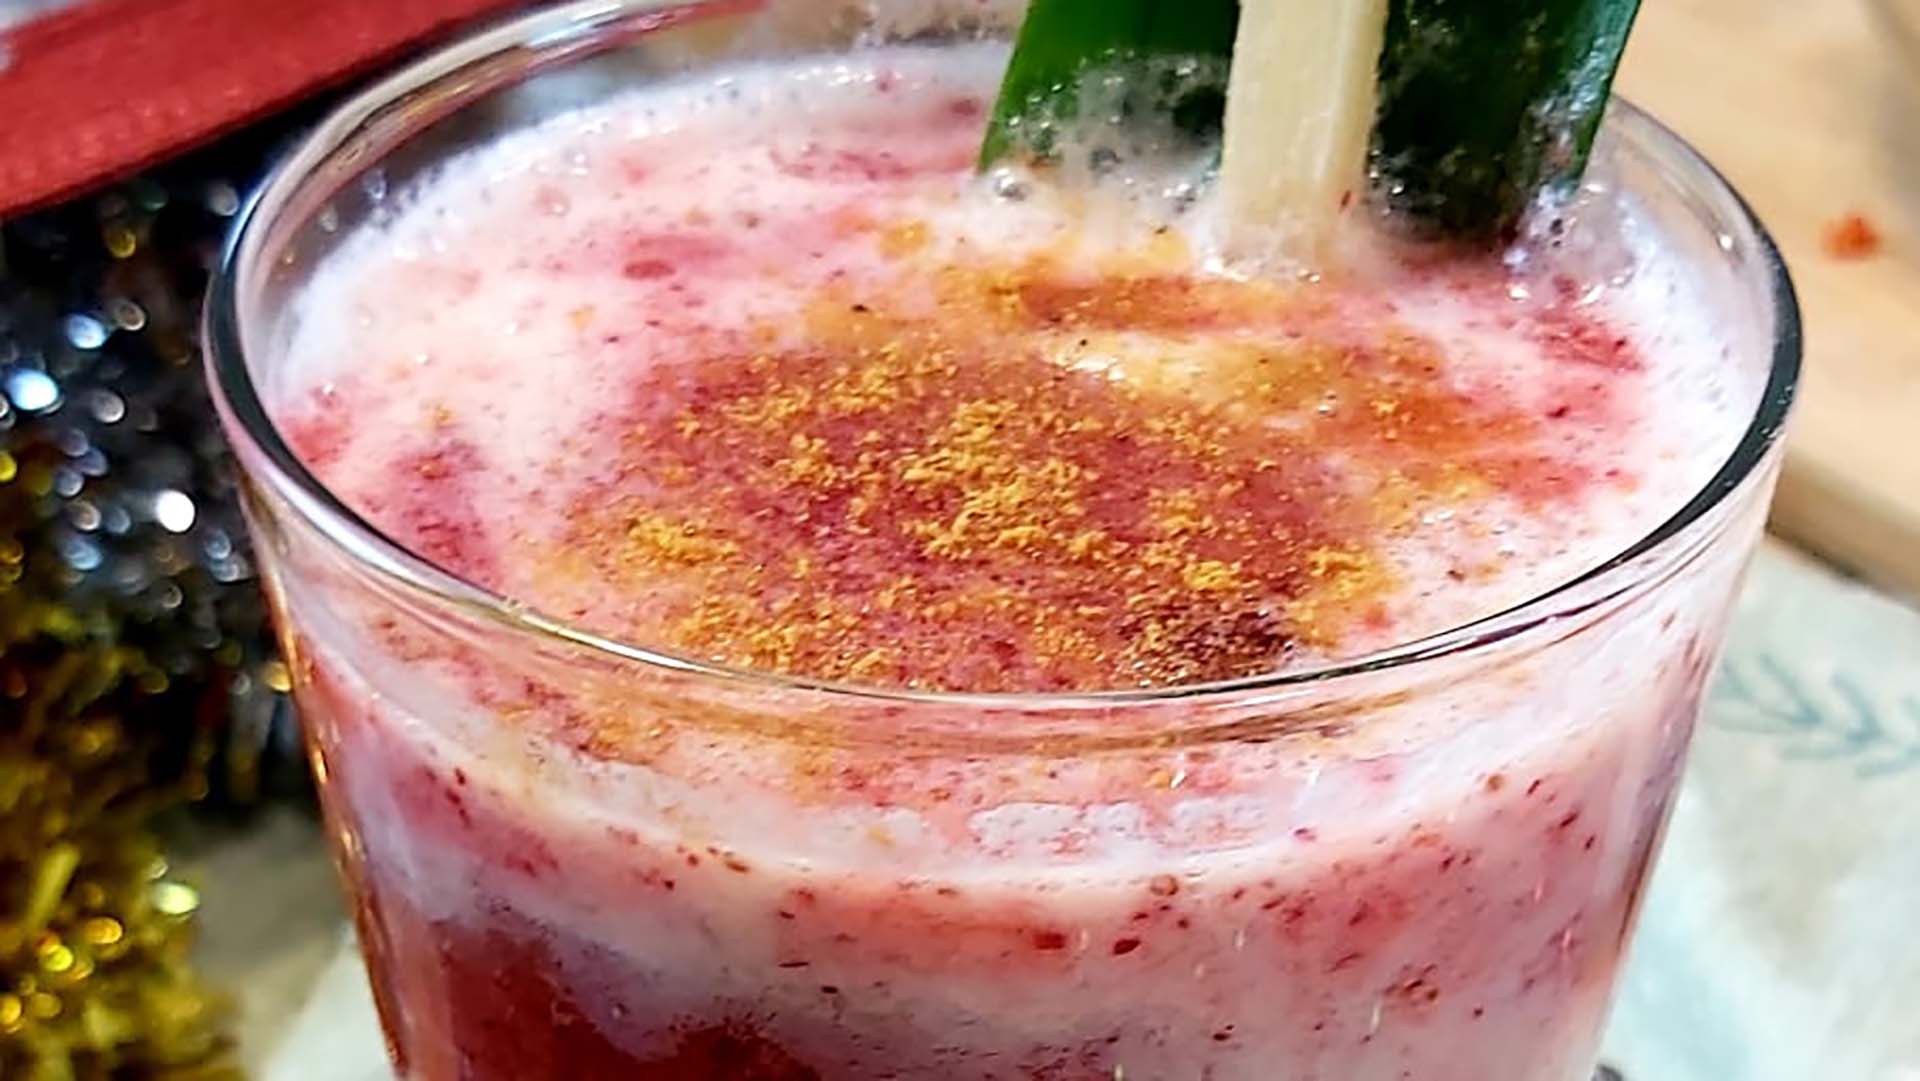 Sky juice with a cranberry twist